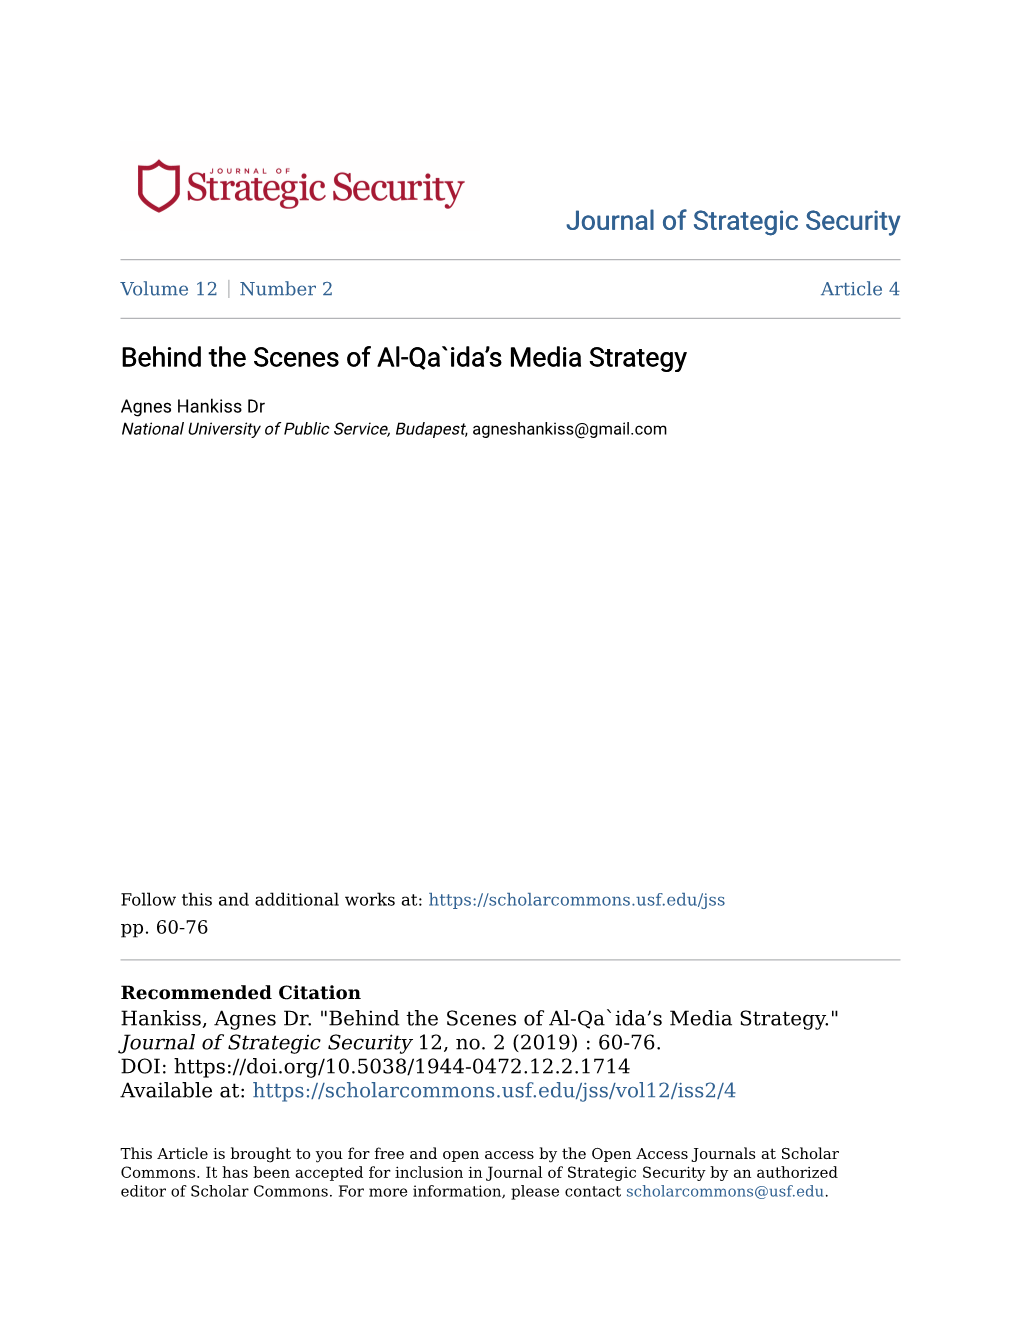 Behind the Scenes of Al-Qa`Ida's Media Strategy